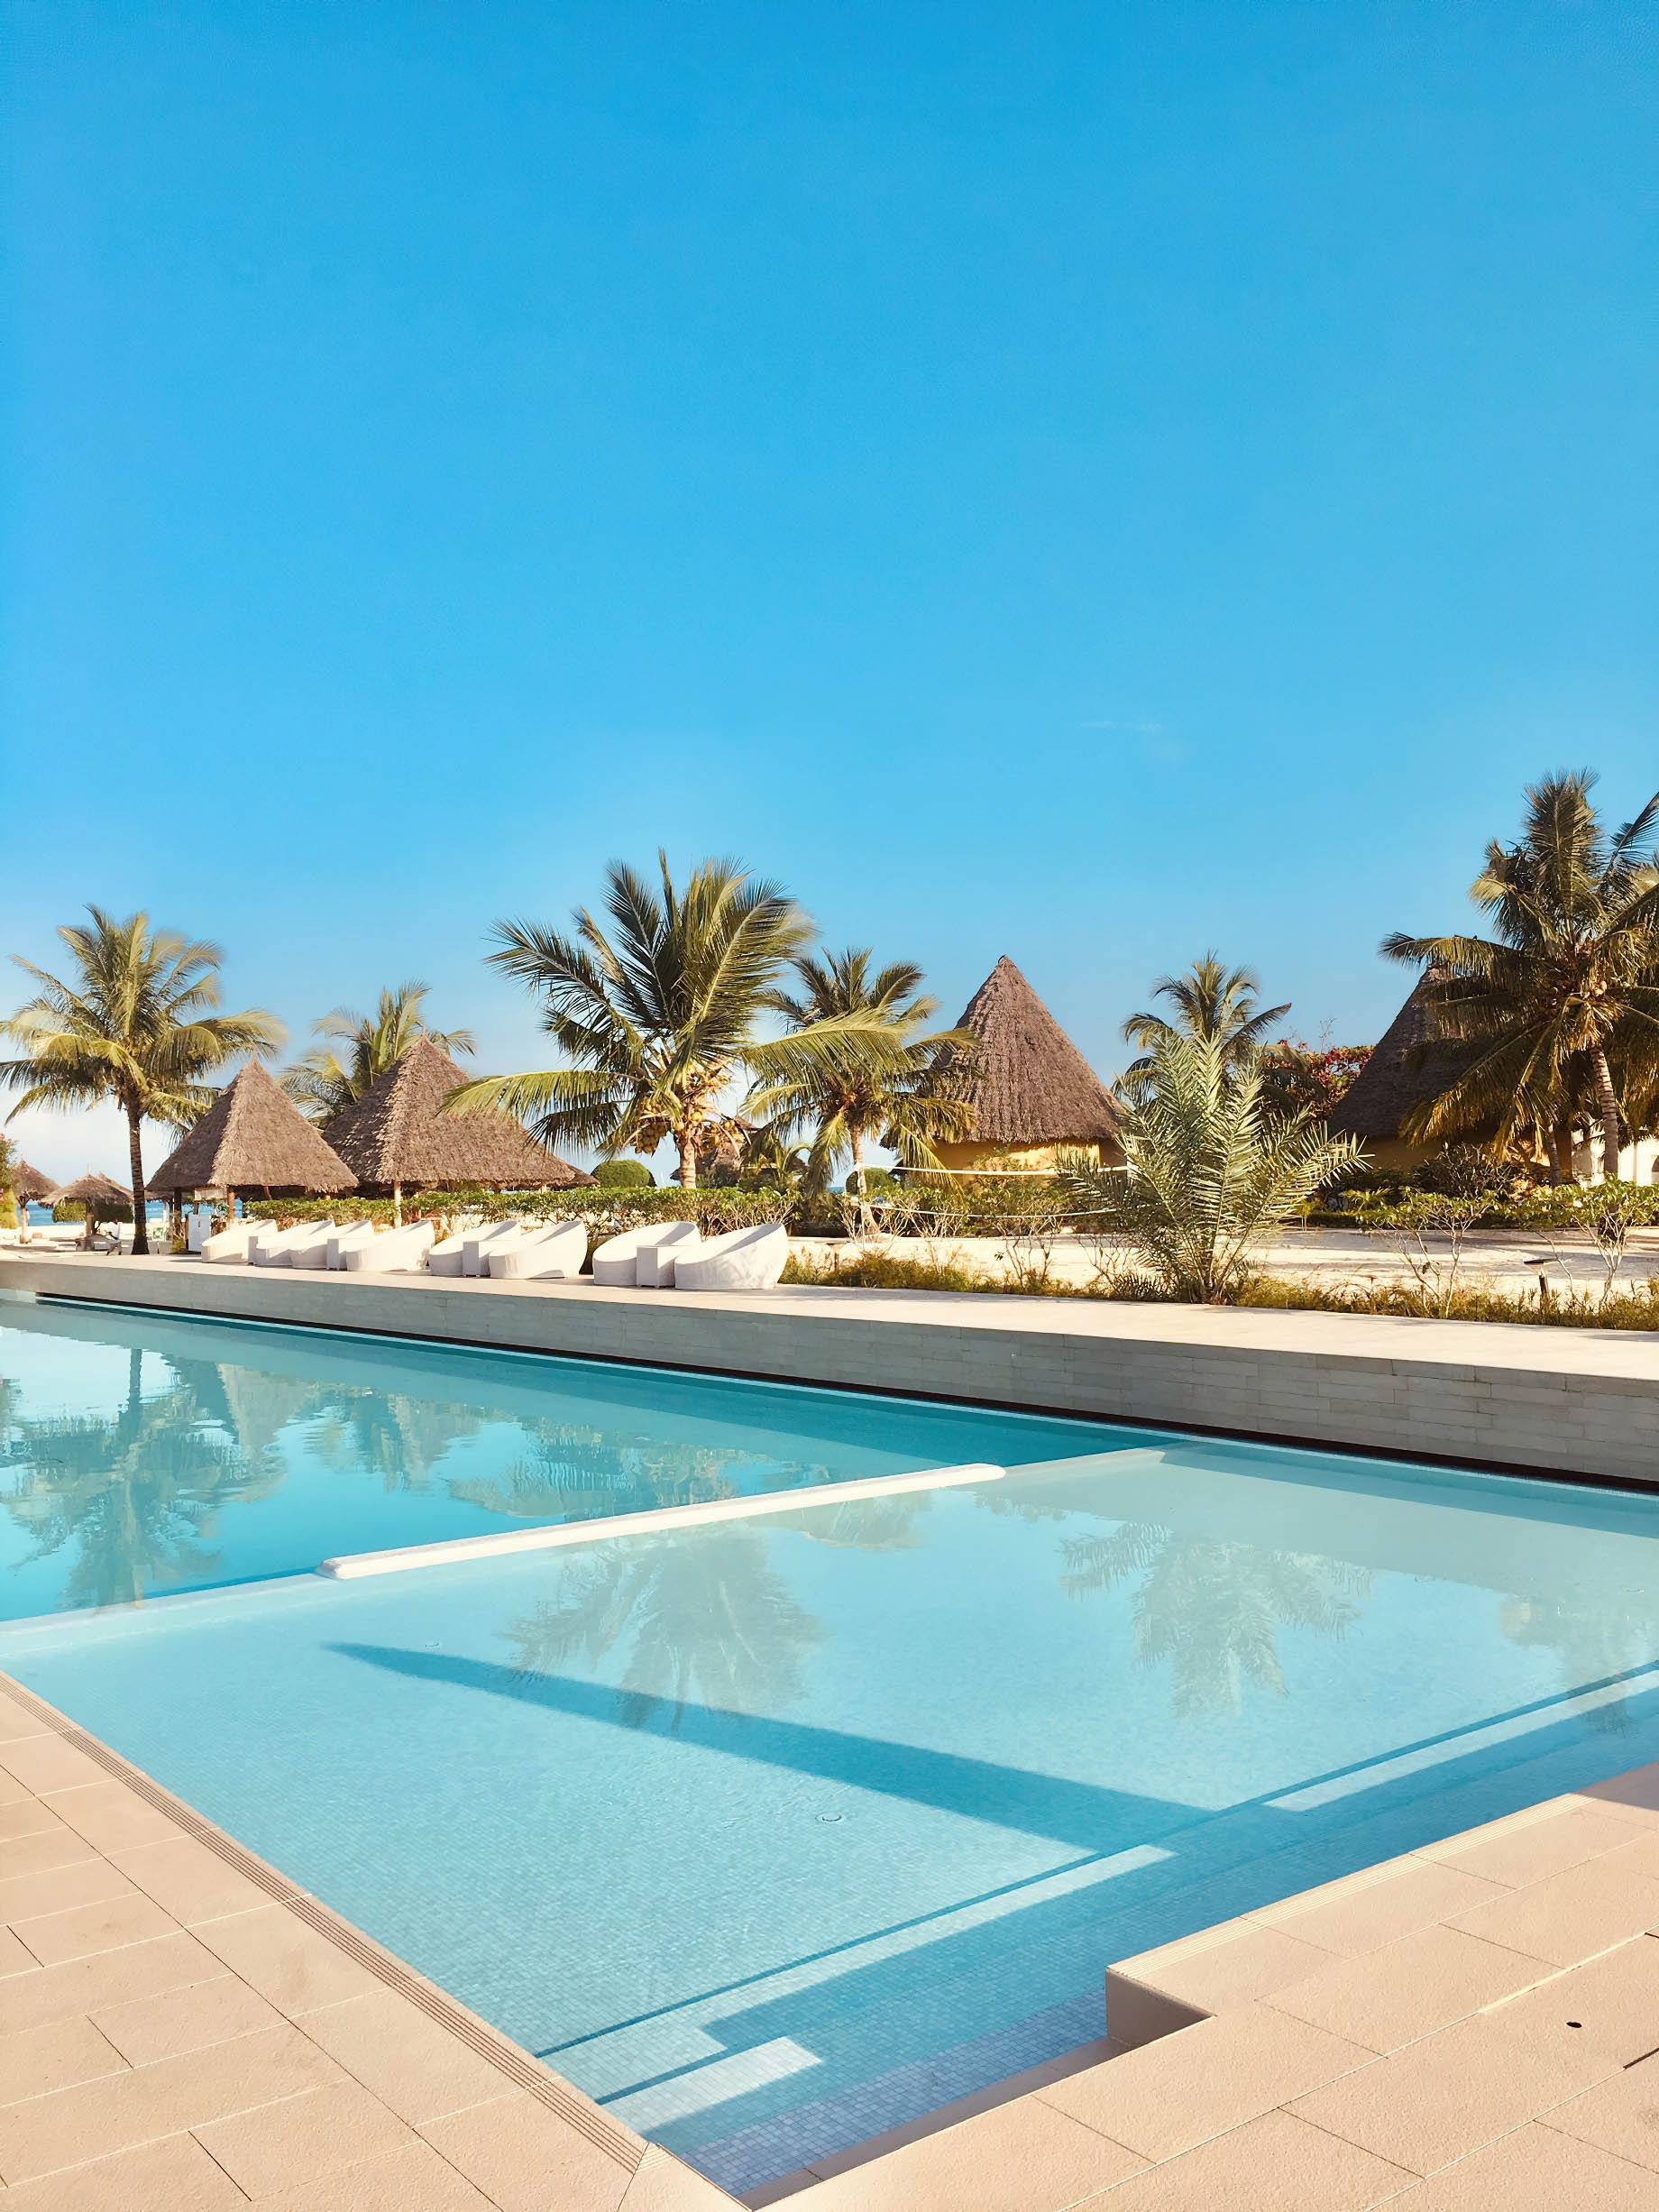 Gold Zanzibar Beach House & Spa Resort – Nungwi, Zanzibar, Tanzania – Pool Deck